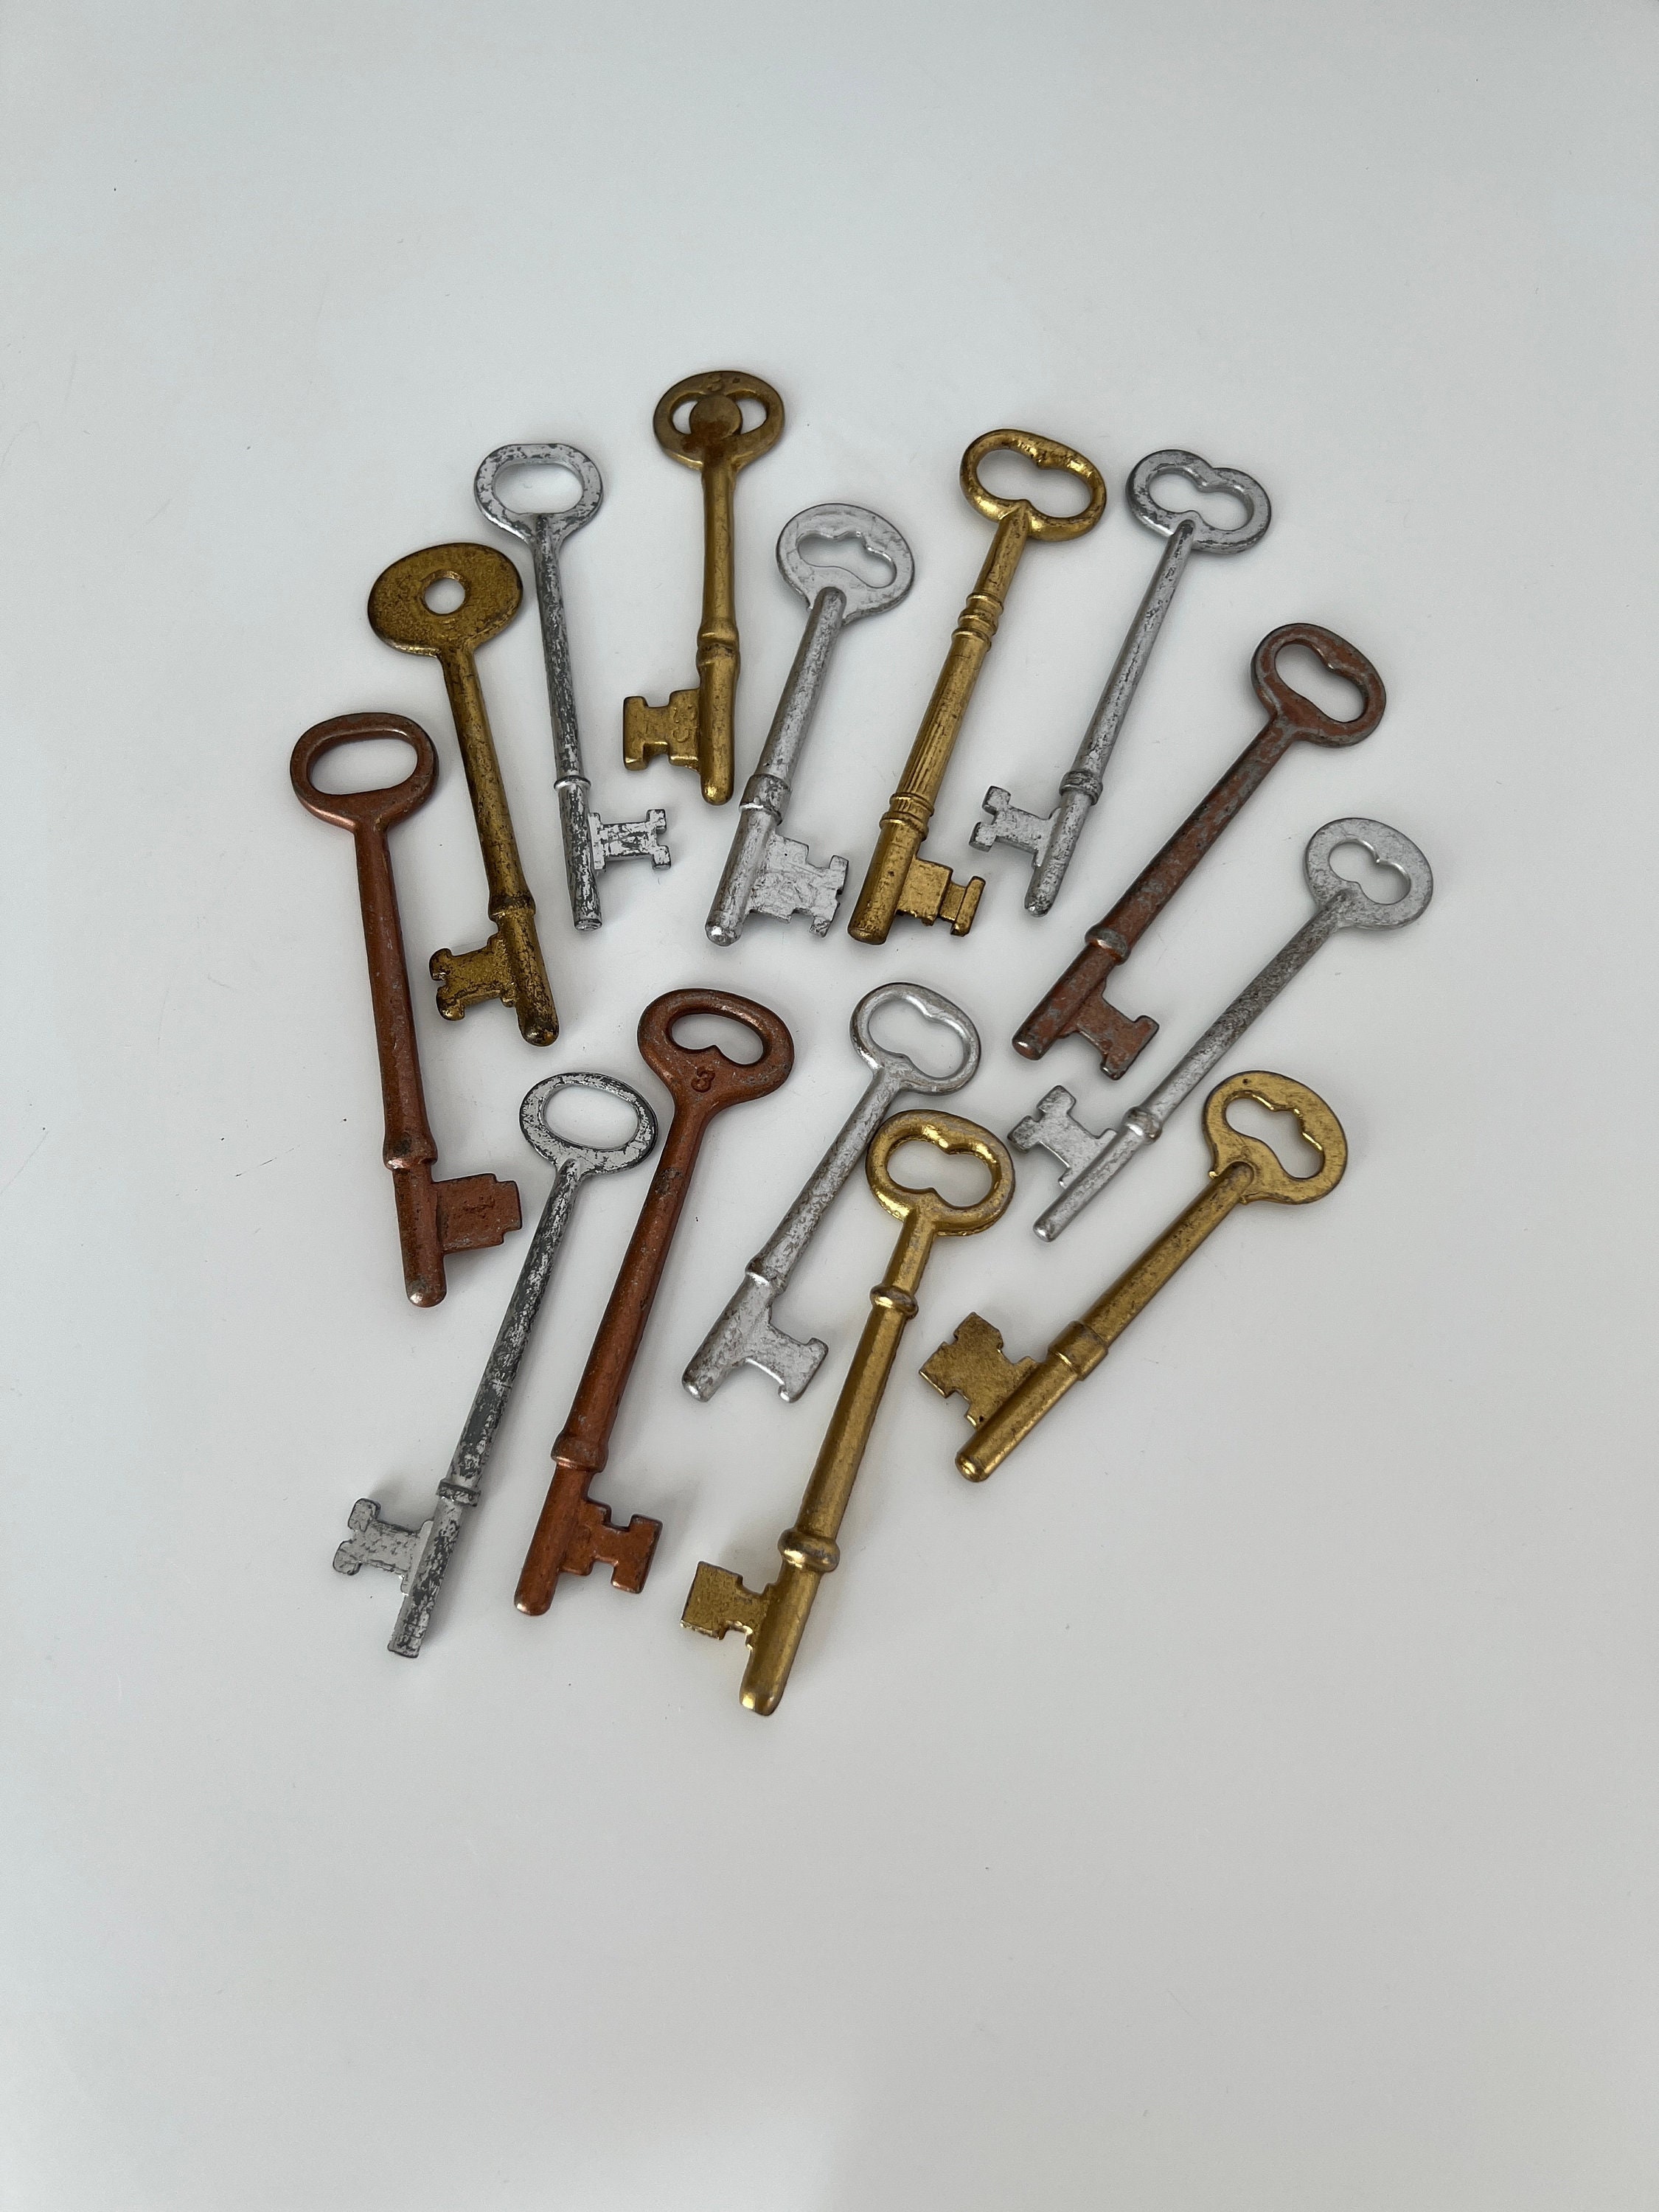 Vintage Original Skeleton Keys Armoire Old Door Decorative Crafts 2 - 2.5